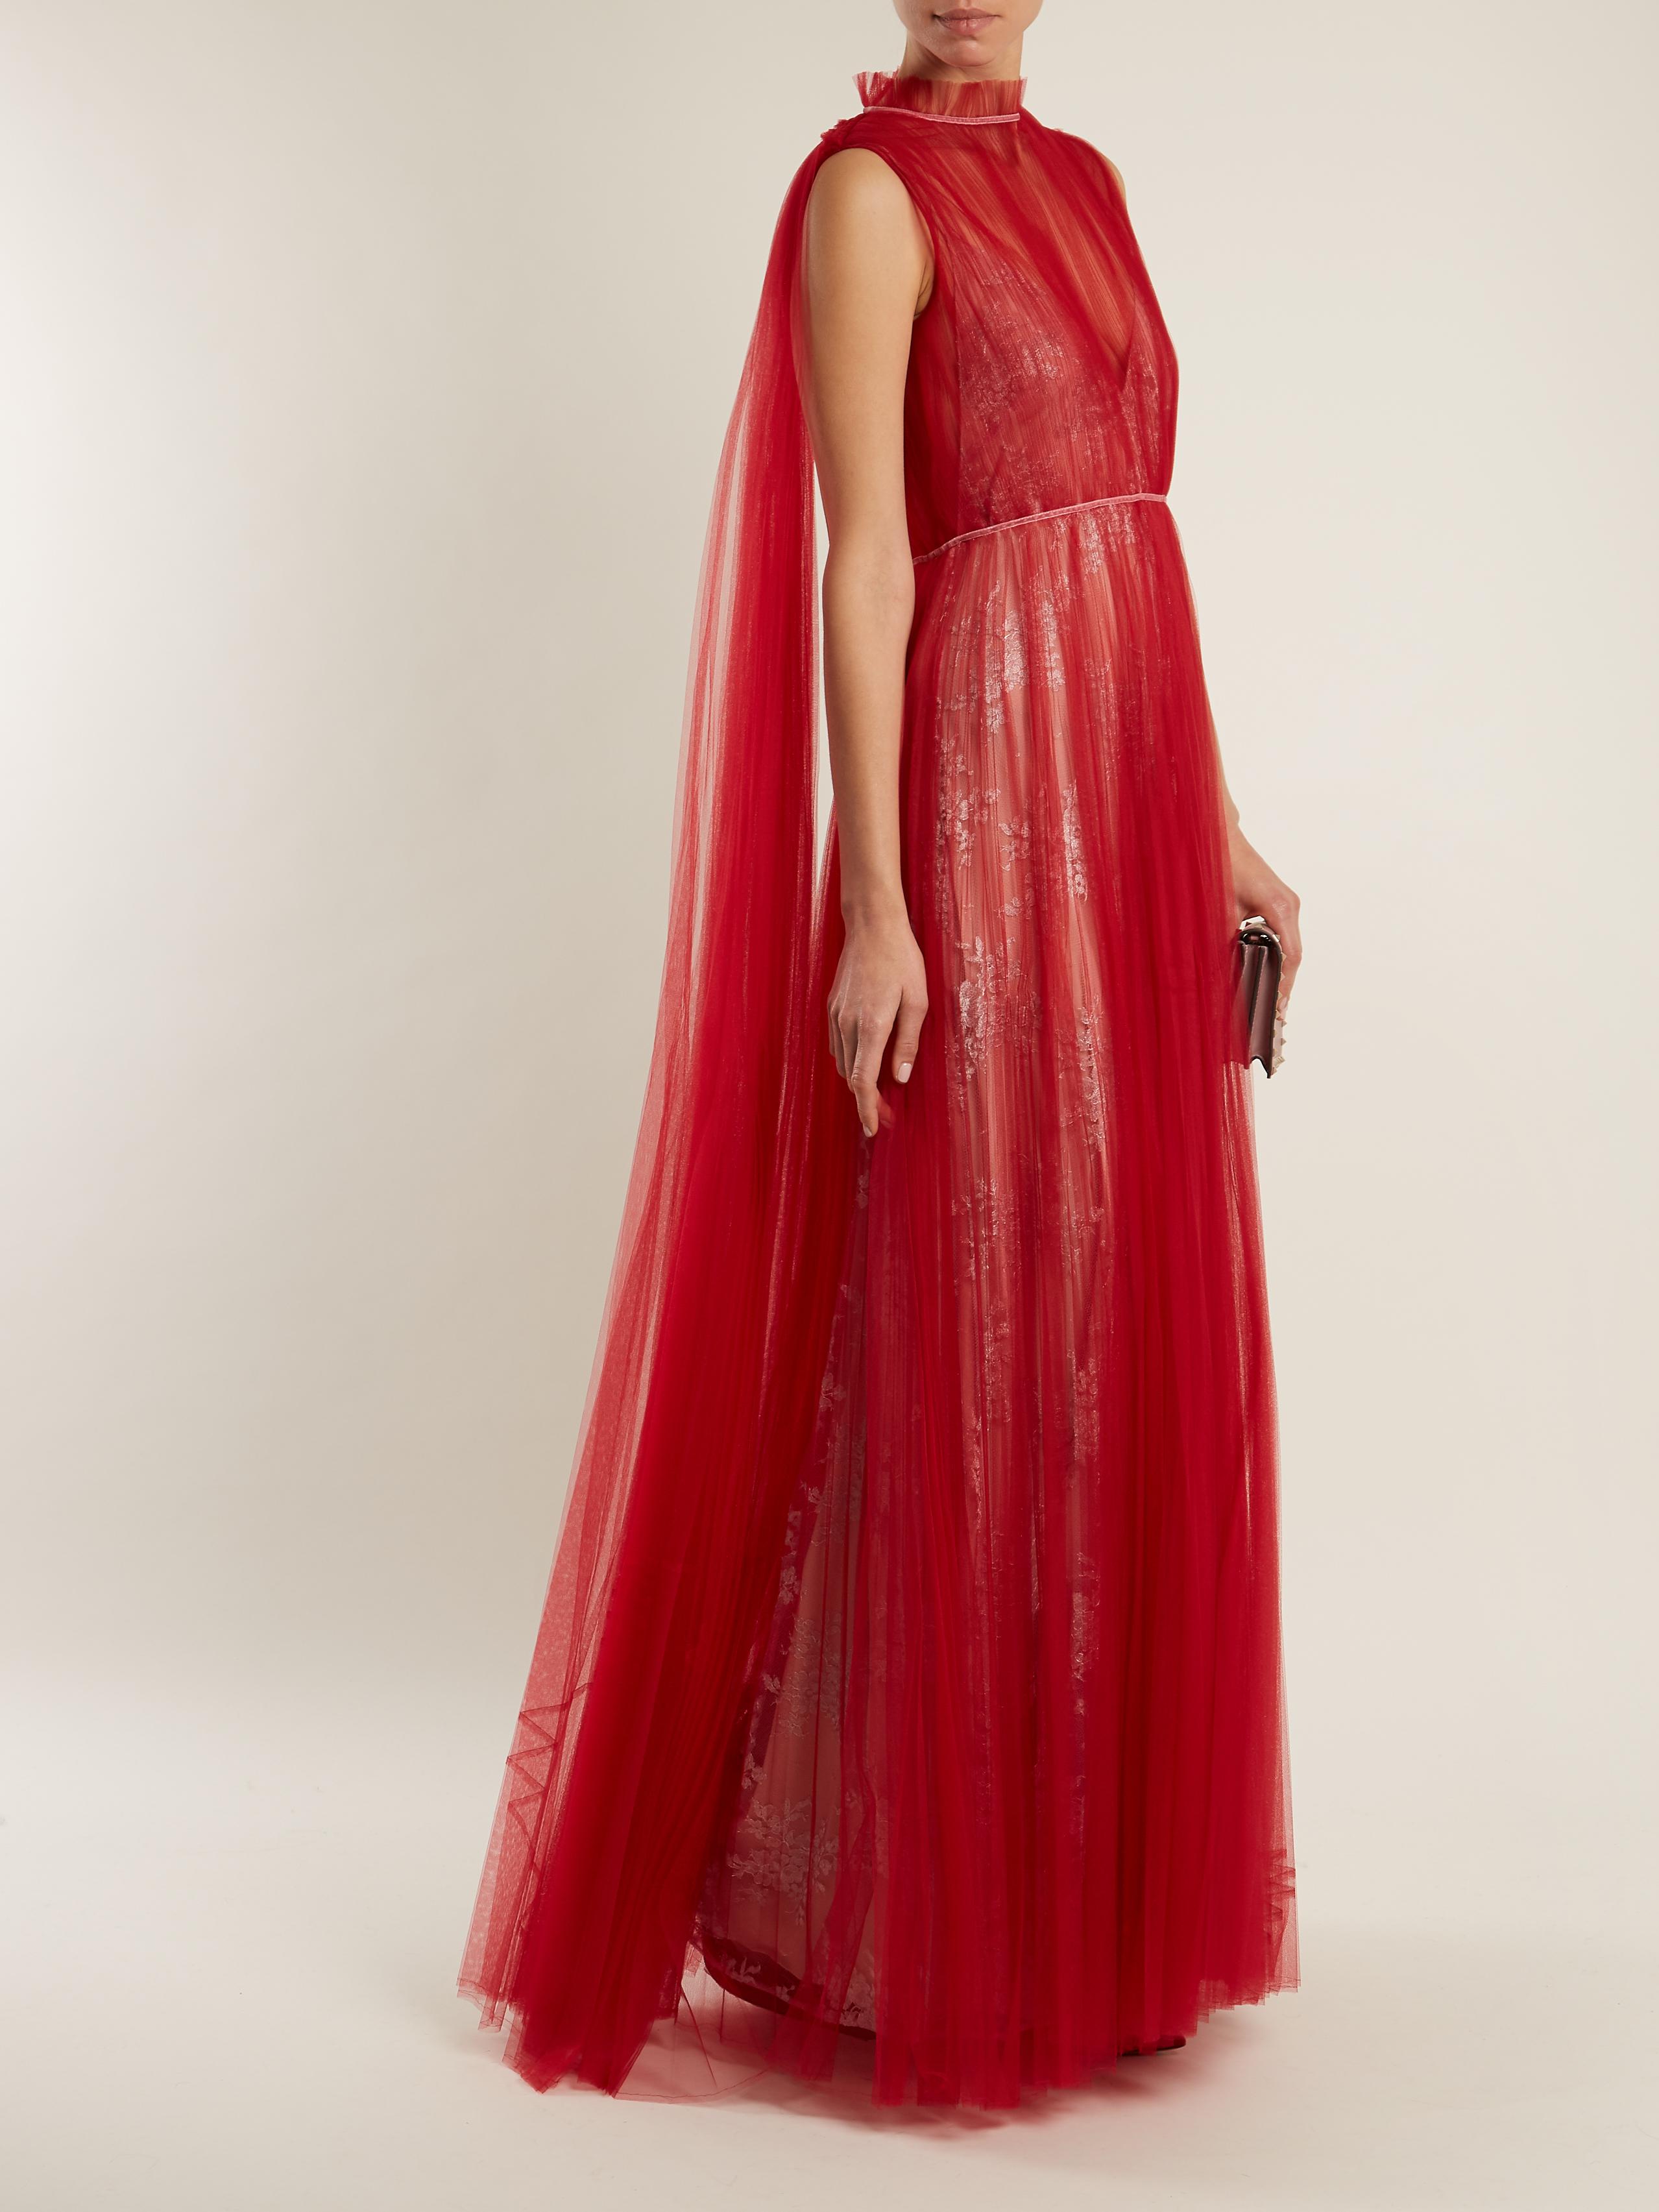 valentino red dress